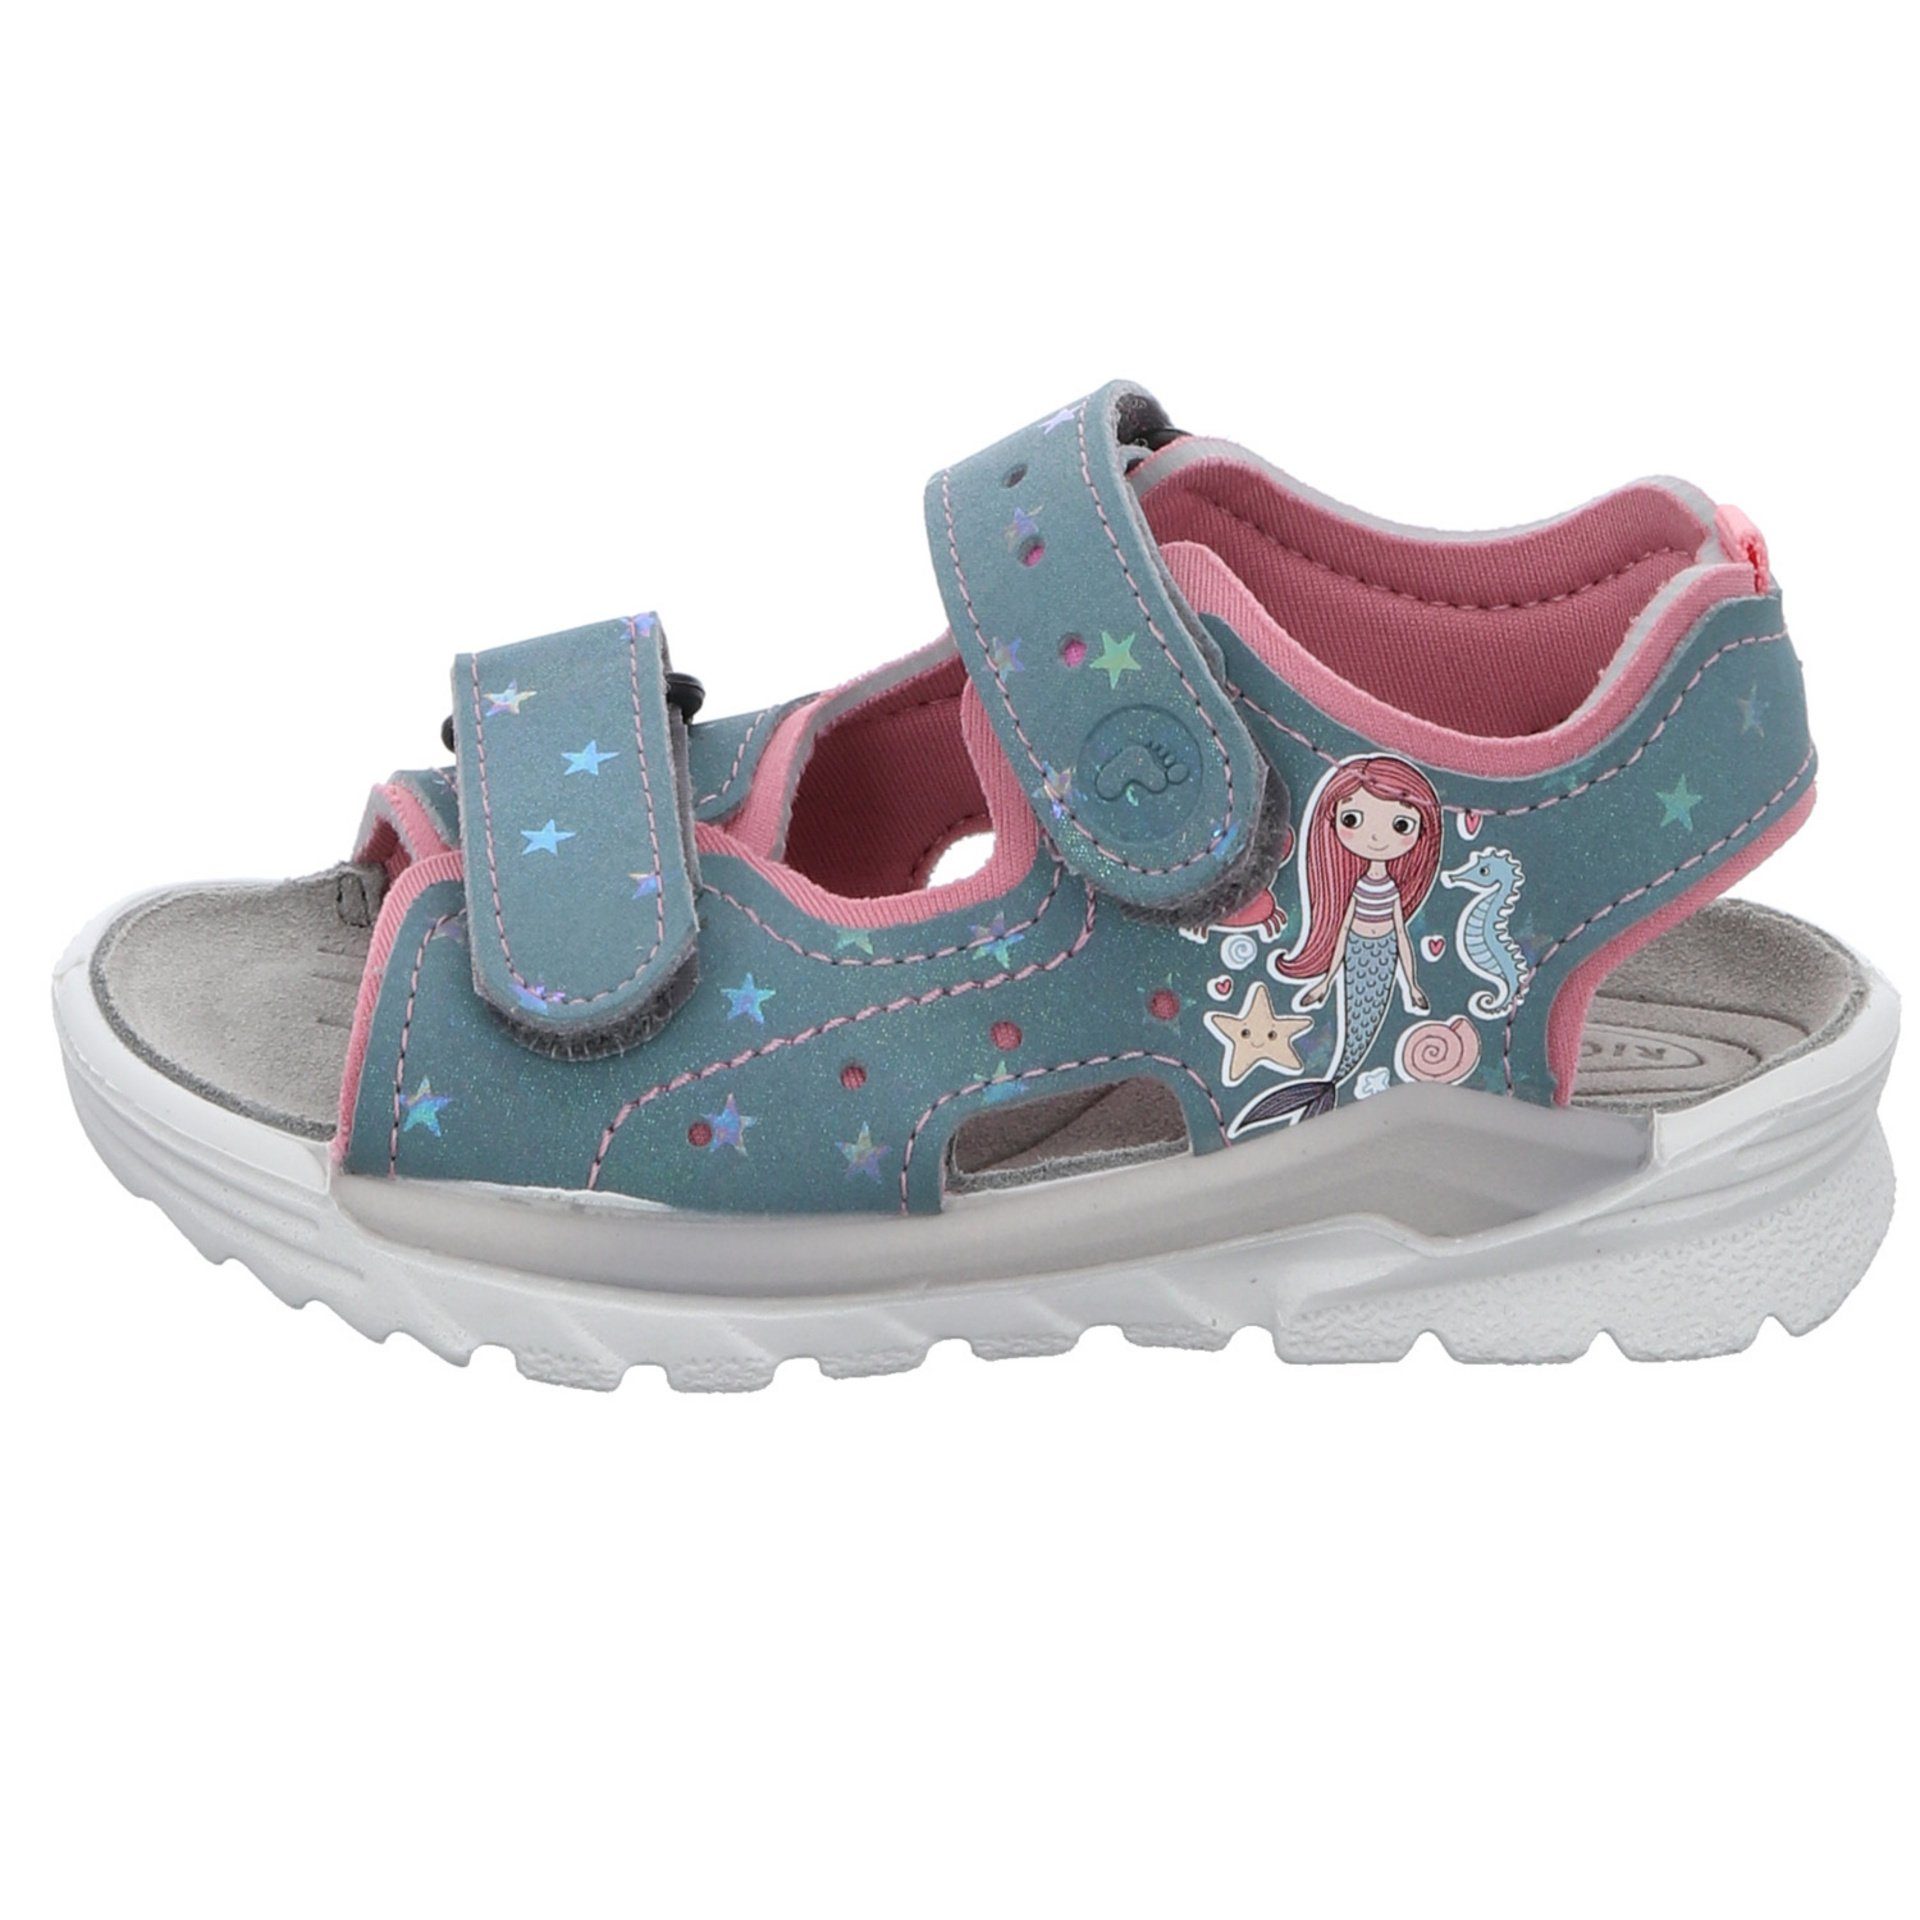 Sandale arctic/mallow Synthetikkombination Schuhe Sandalen Ricosta Sandale Surf Kinderschuhe (130) Mädchen